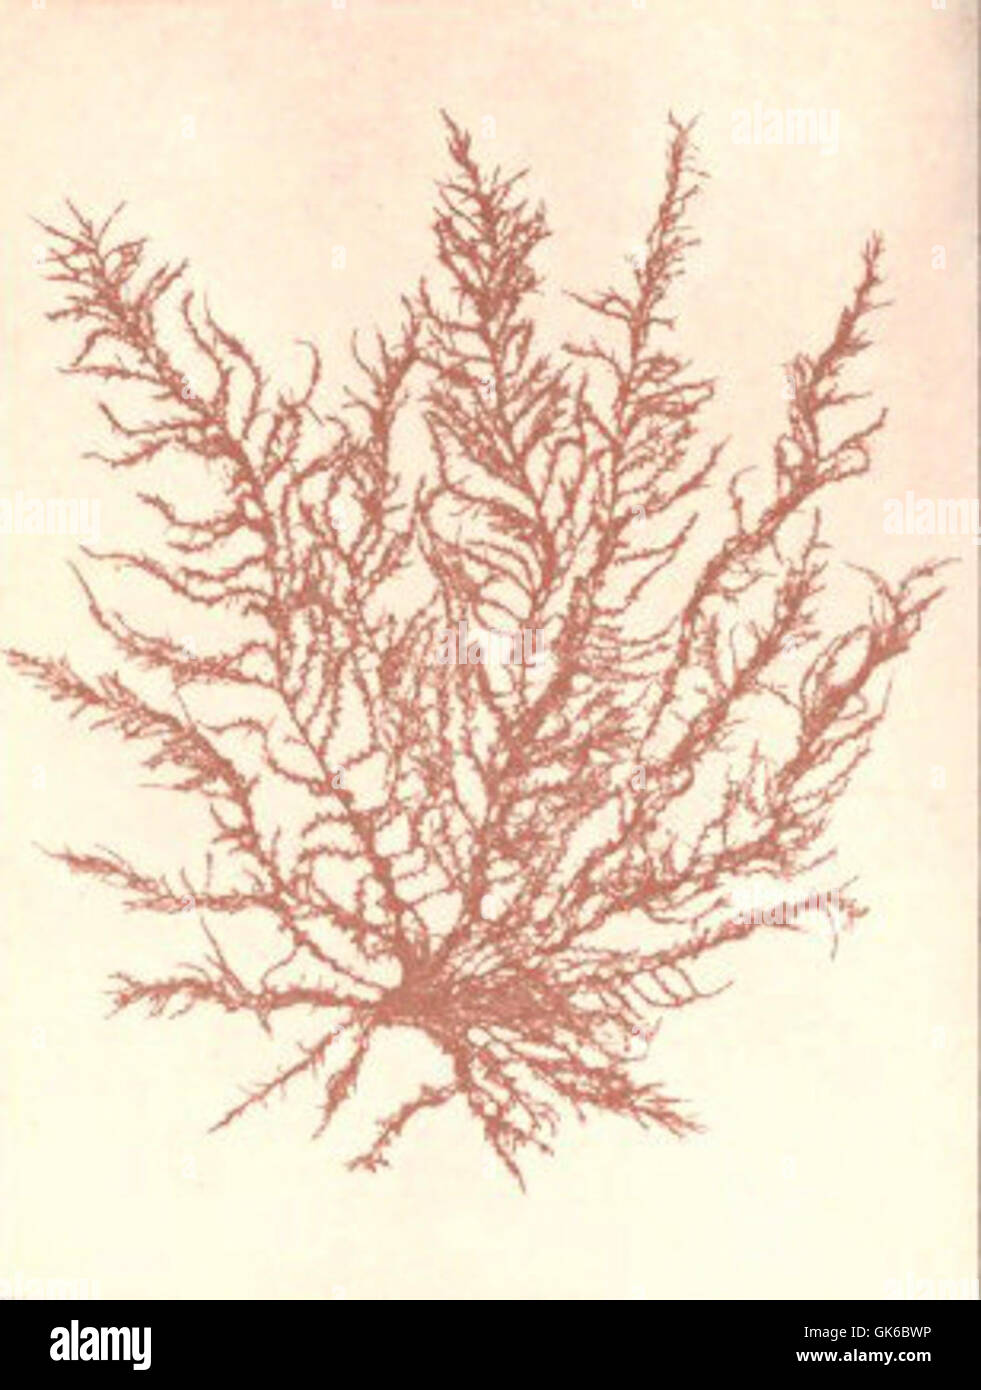 53645 Rhodophycees ou Floridees (Algues rouges) Rhodomelees, Brongniartella byssoides (Good et Wood) Schm Stock Photo